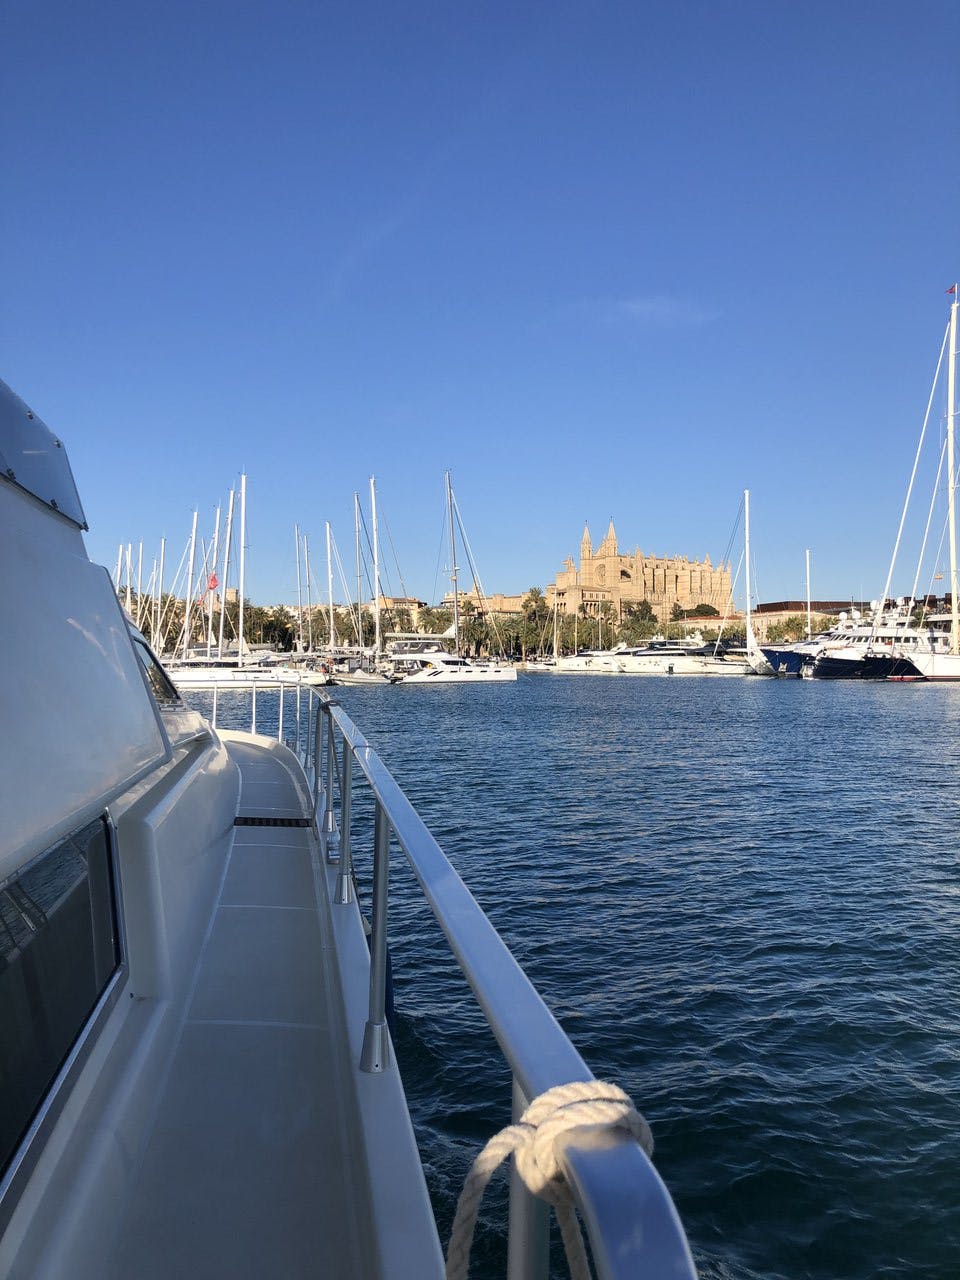 Book Ferretti Yachts 175 Fly Motor yacht for bareboat charter in Palma de Mallorca, La Lonja, Balearic Islands, Spain with TripYacht!, picture 19